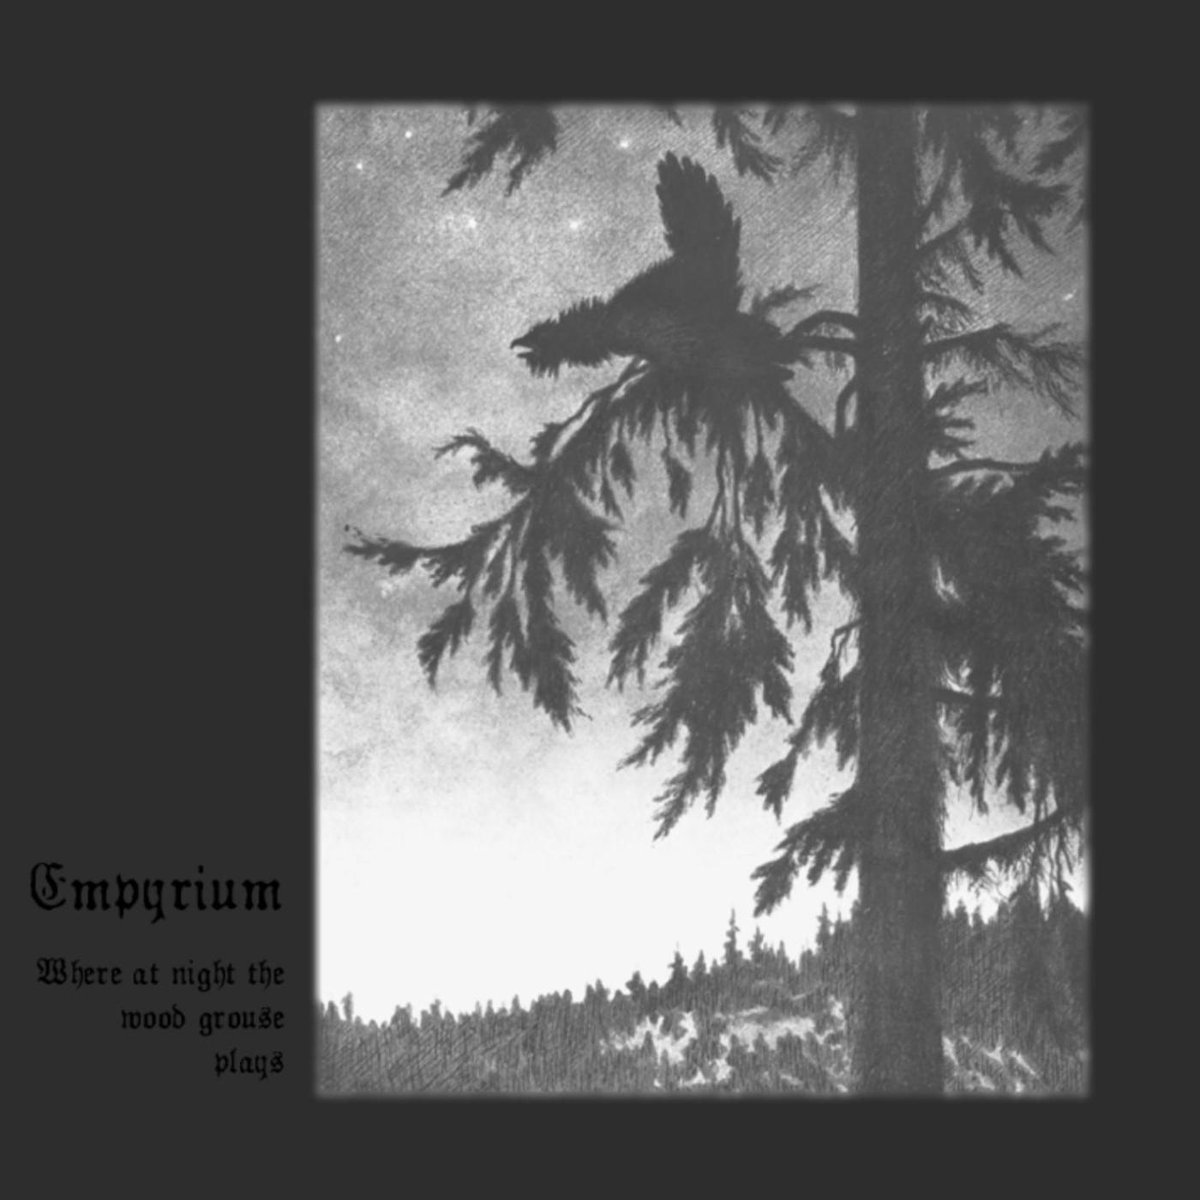 Empyrium - Where at Night the Wood Grouse Plays | Musiki Cemiyeti